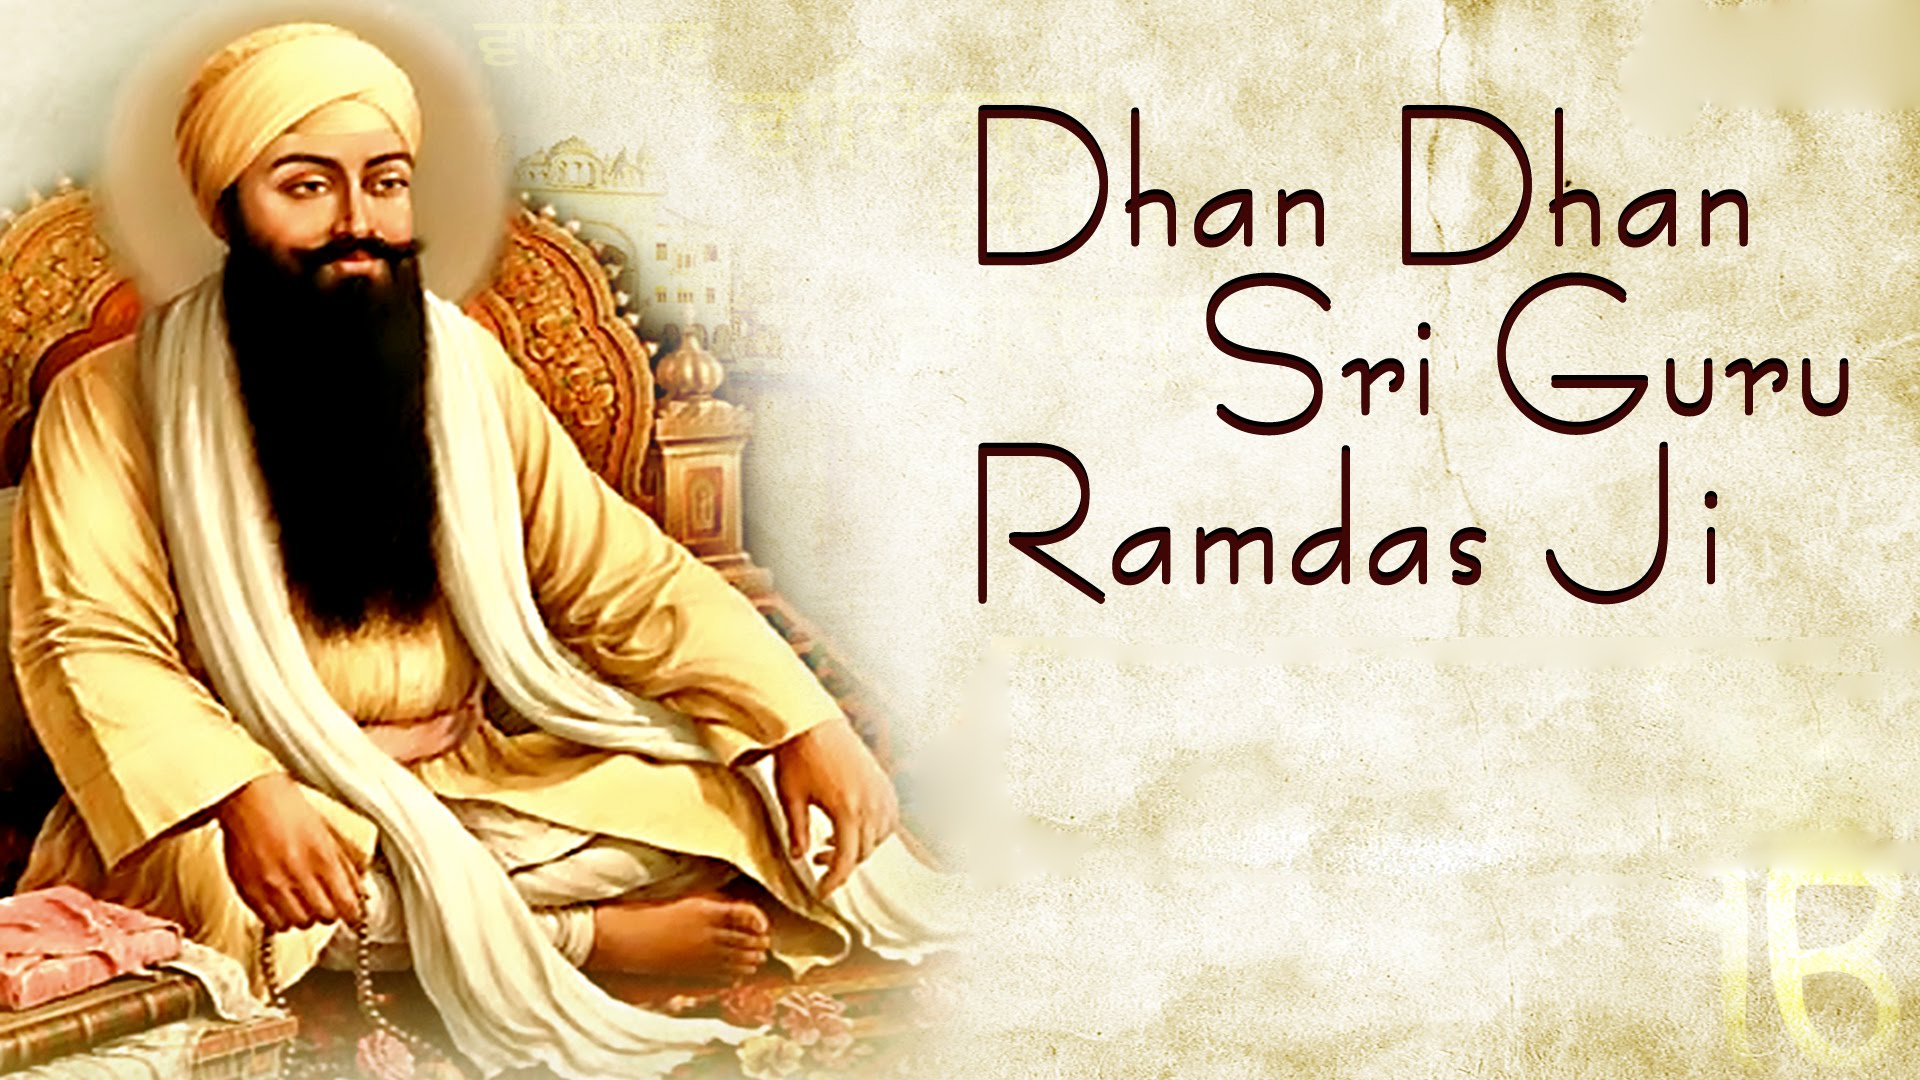 Shri Guru Ram Das Ji Images Download | 10 Sikh Gurus